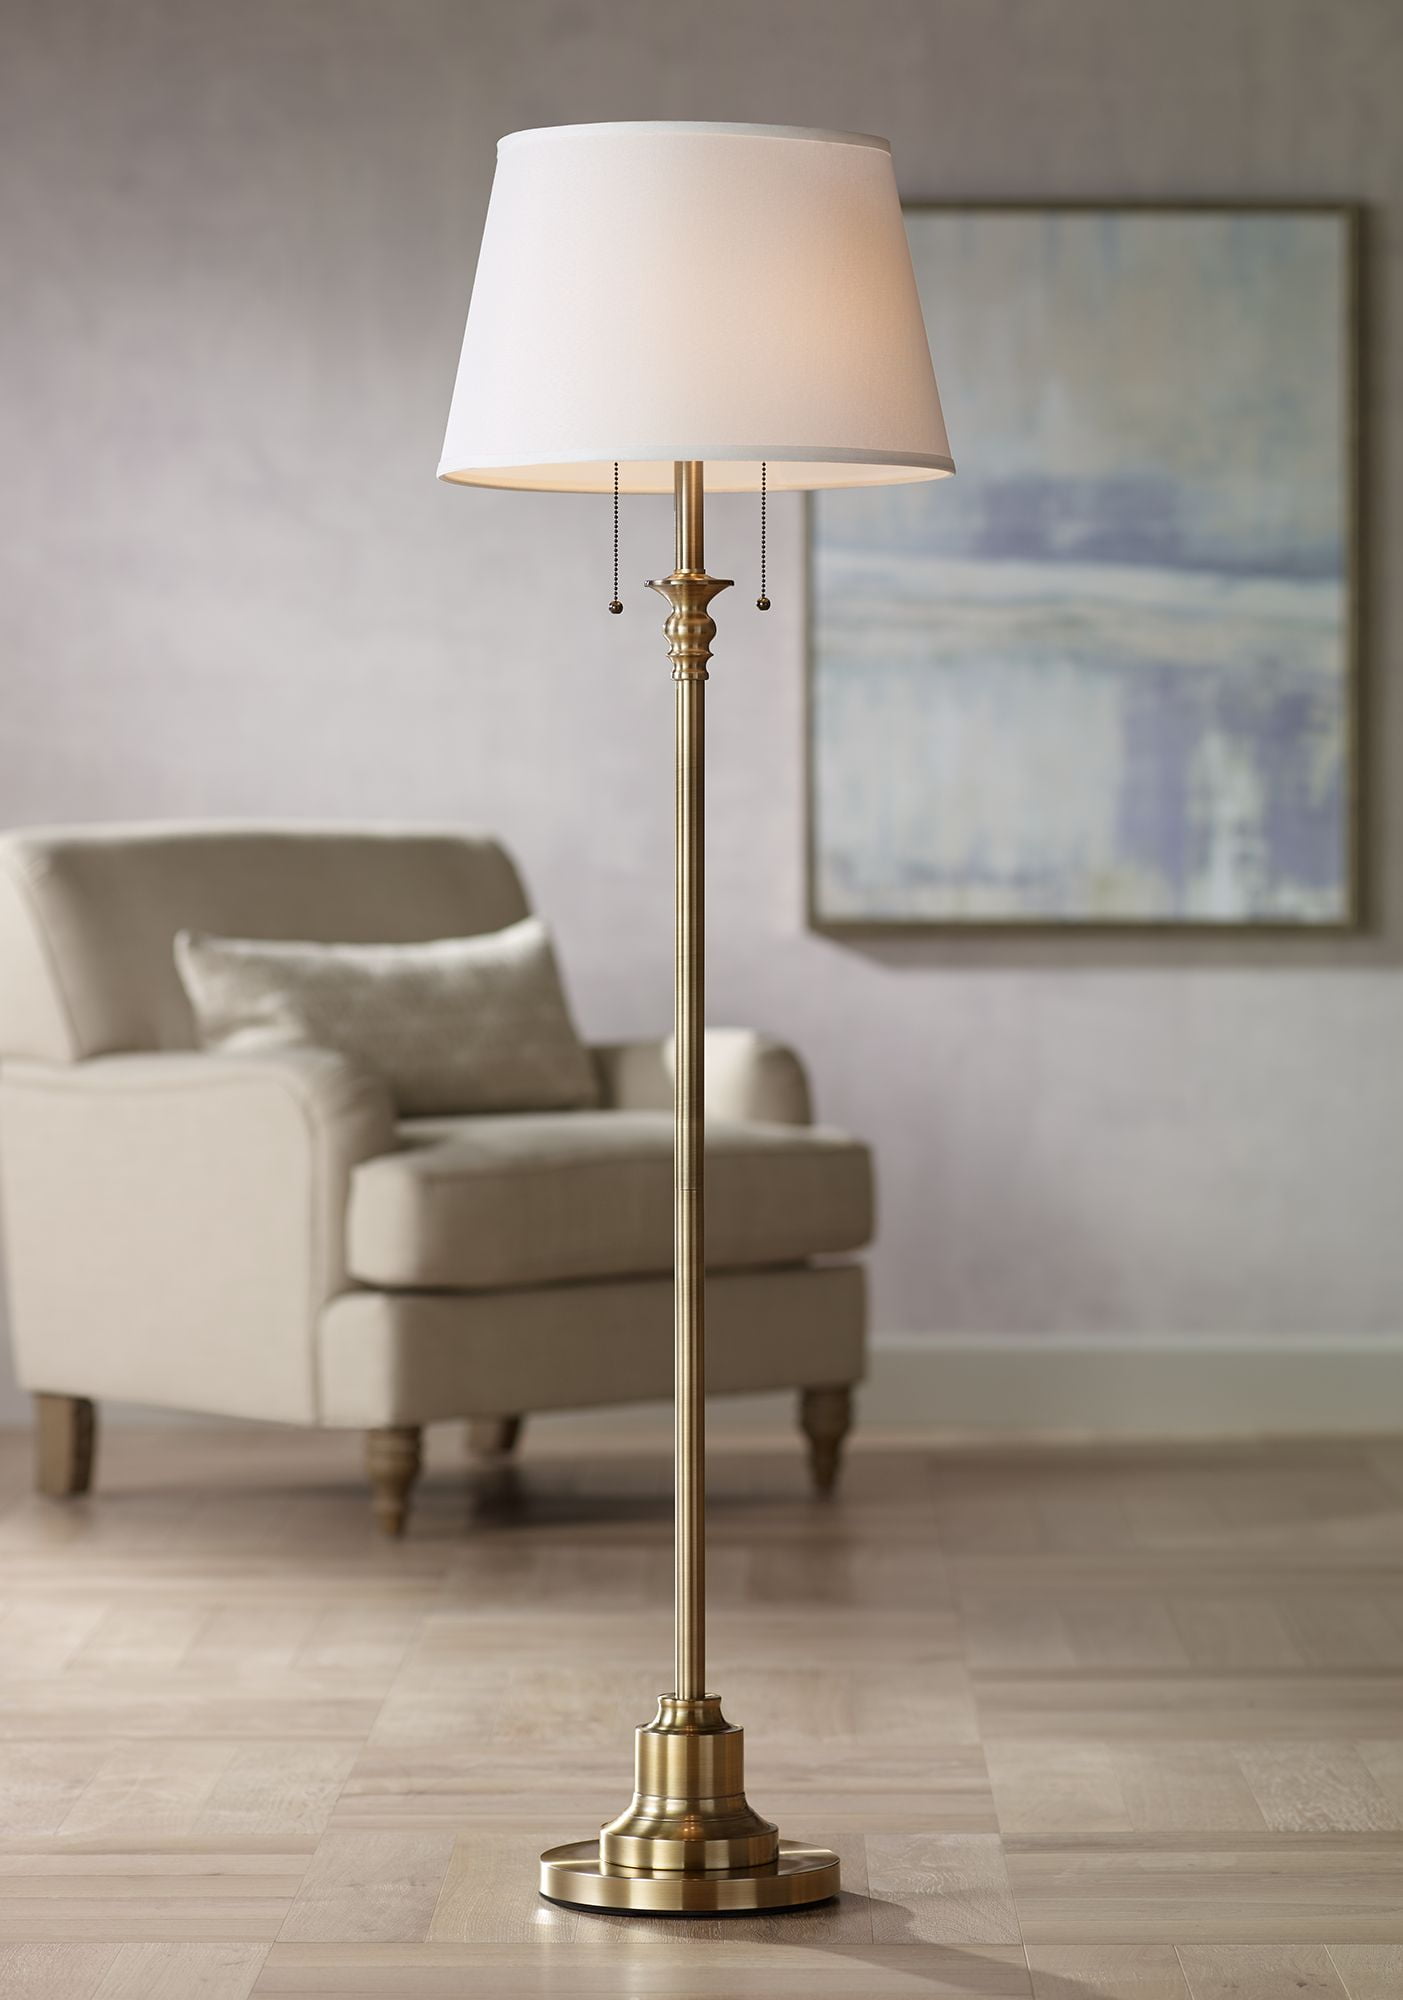 360 Lighting Spenser Vintage Floor Lamp 58 Tall Brushed Antique Brass  Metal Off White Linen Drum Shade for Living Room Bedroom Office House Home  